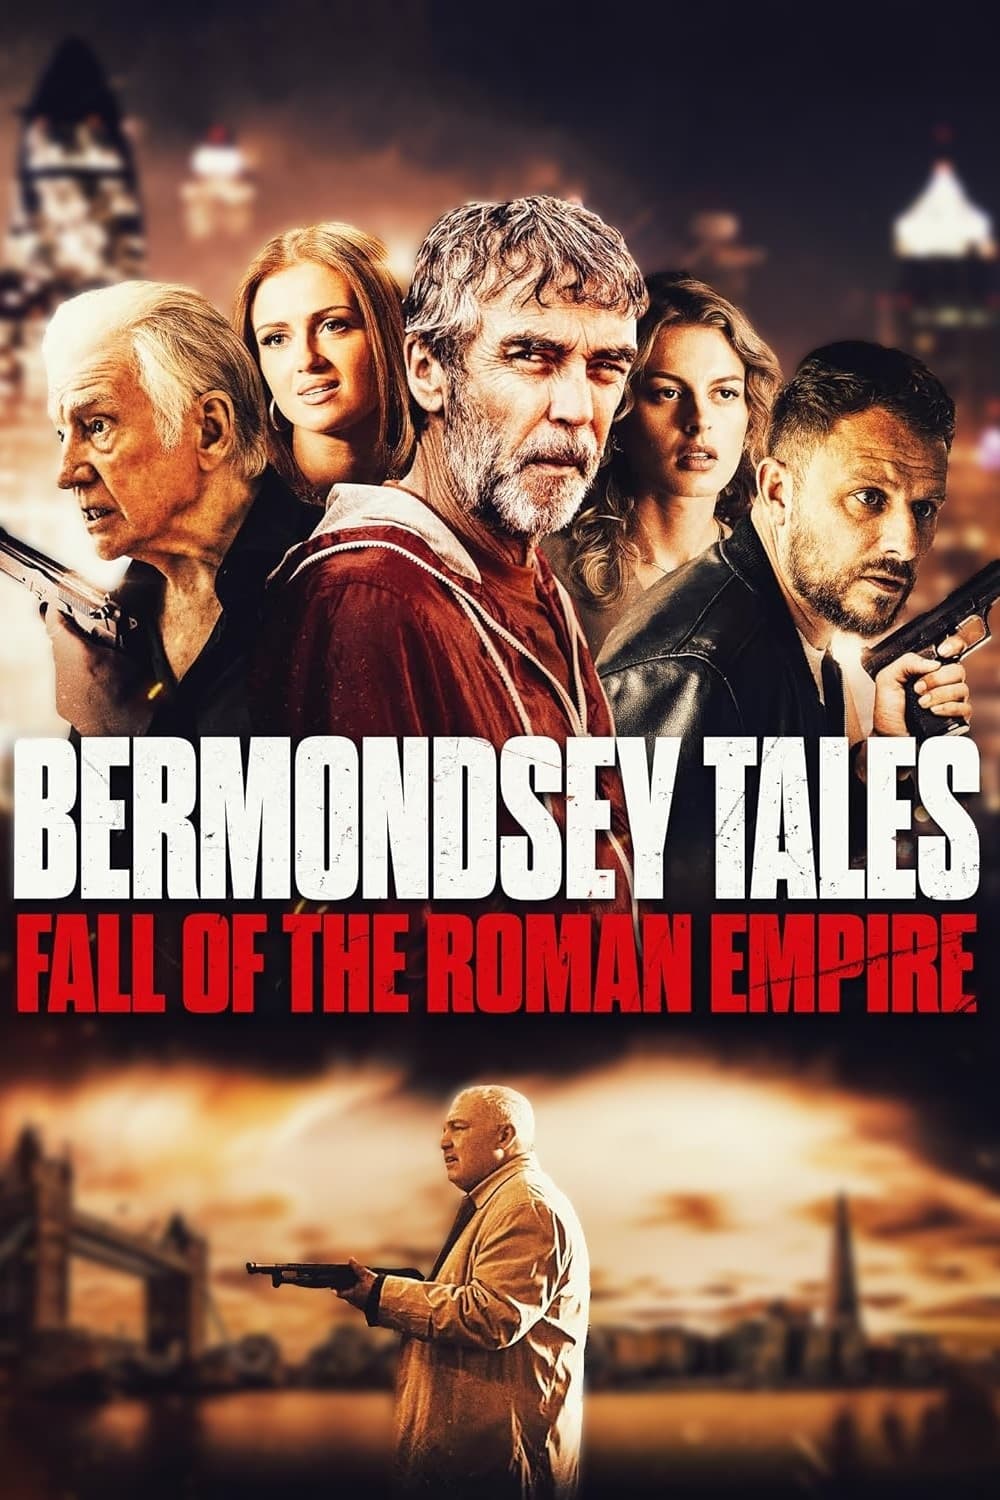 London Tales: Fall of the Roman Empire